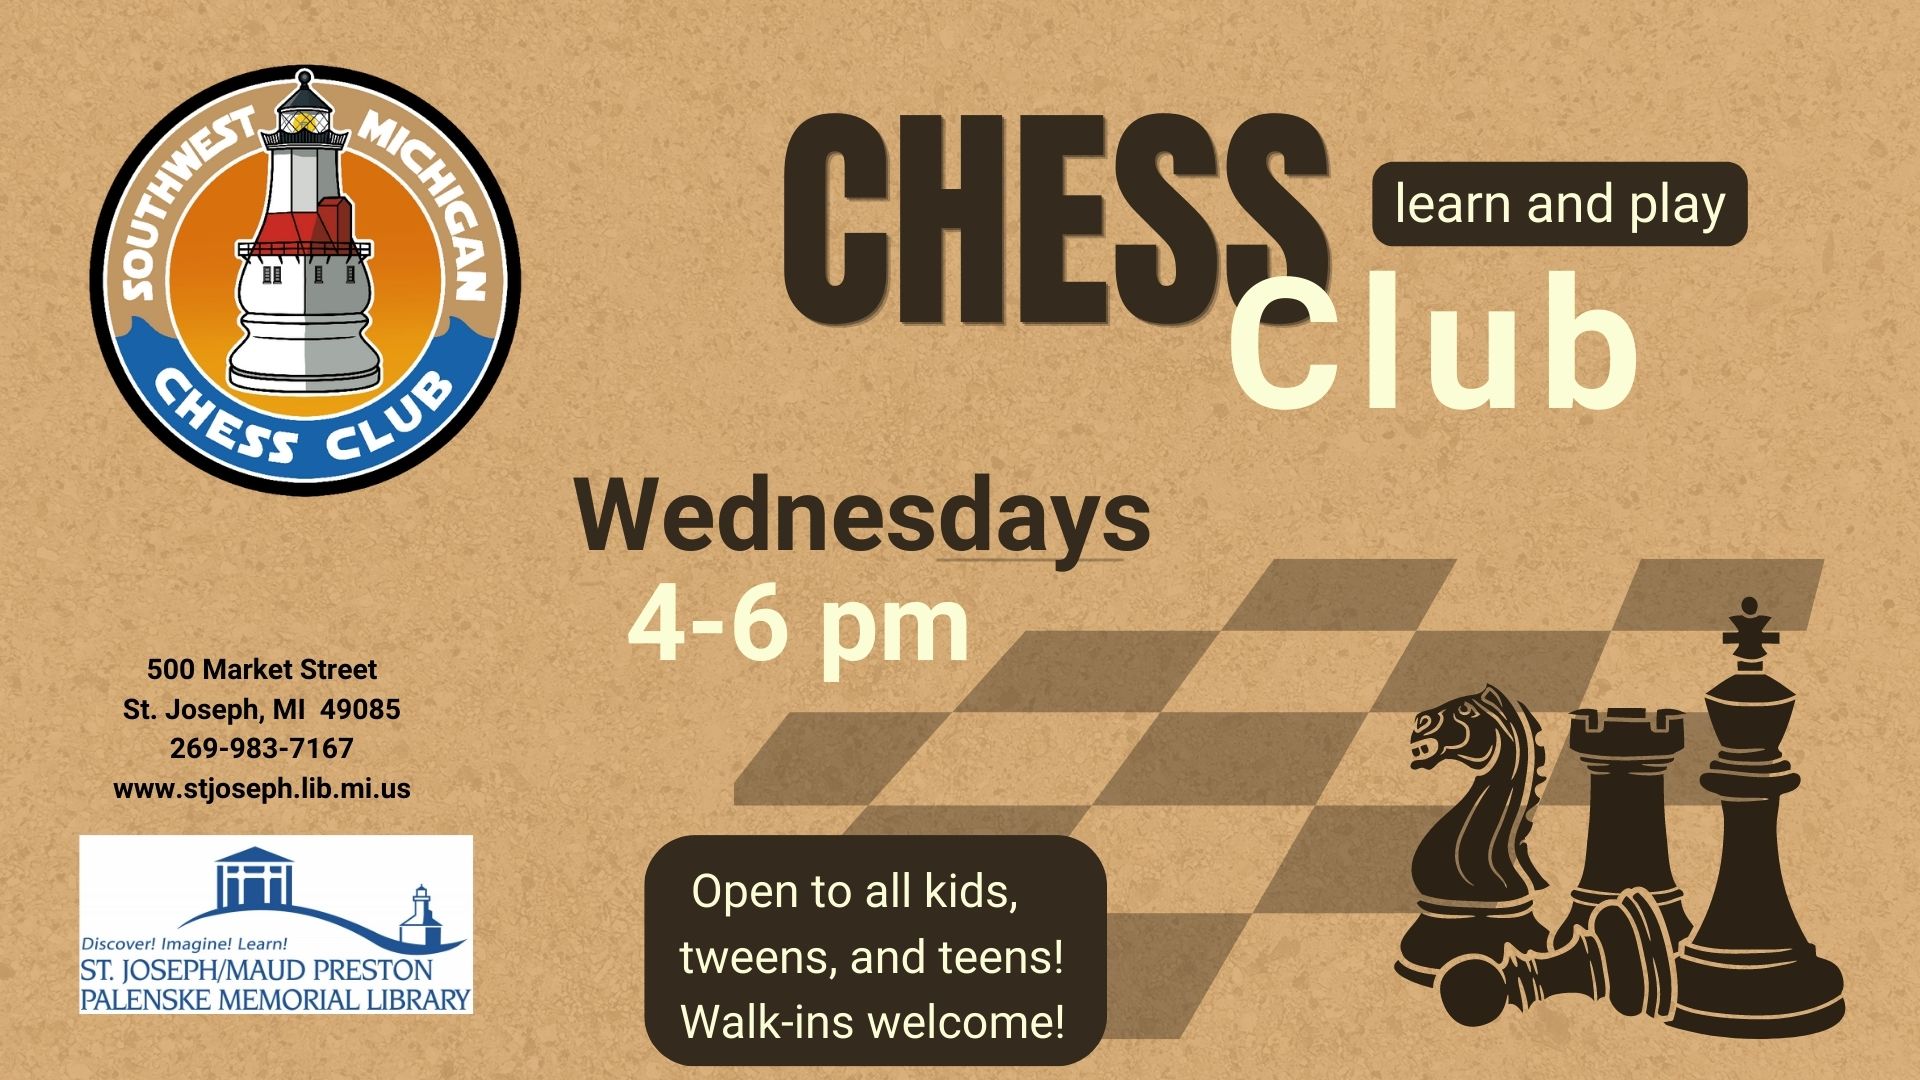 Learn - U.S. Chess Center